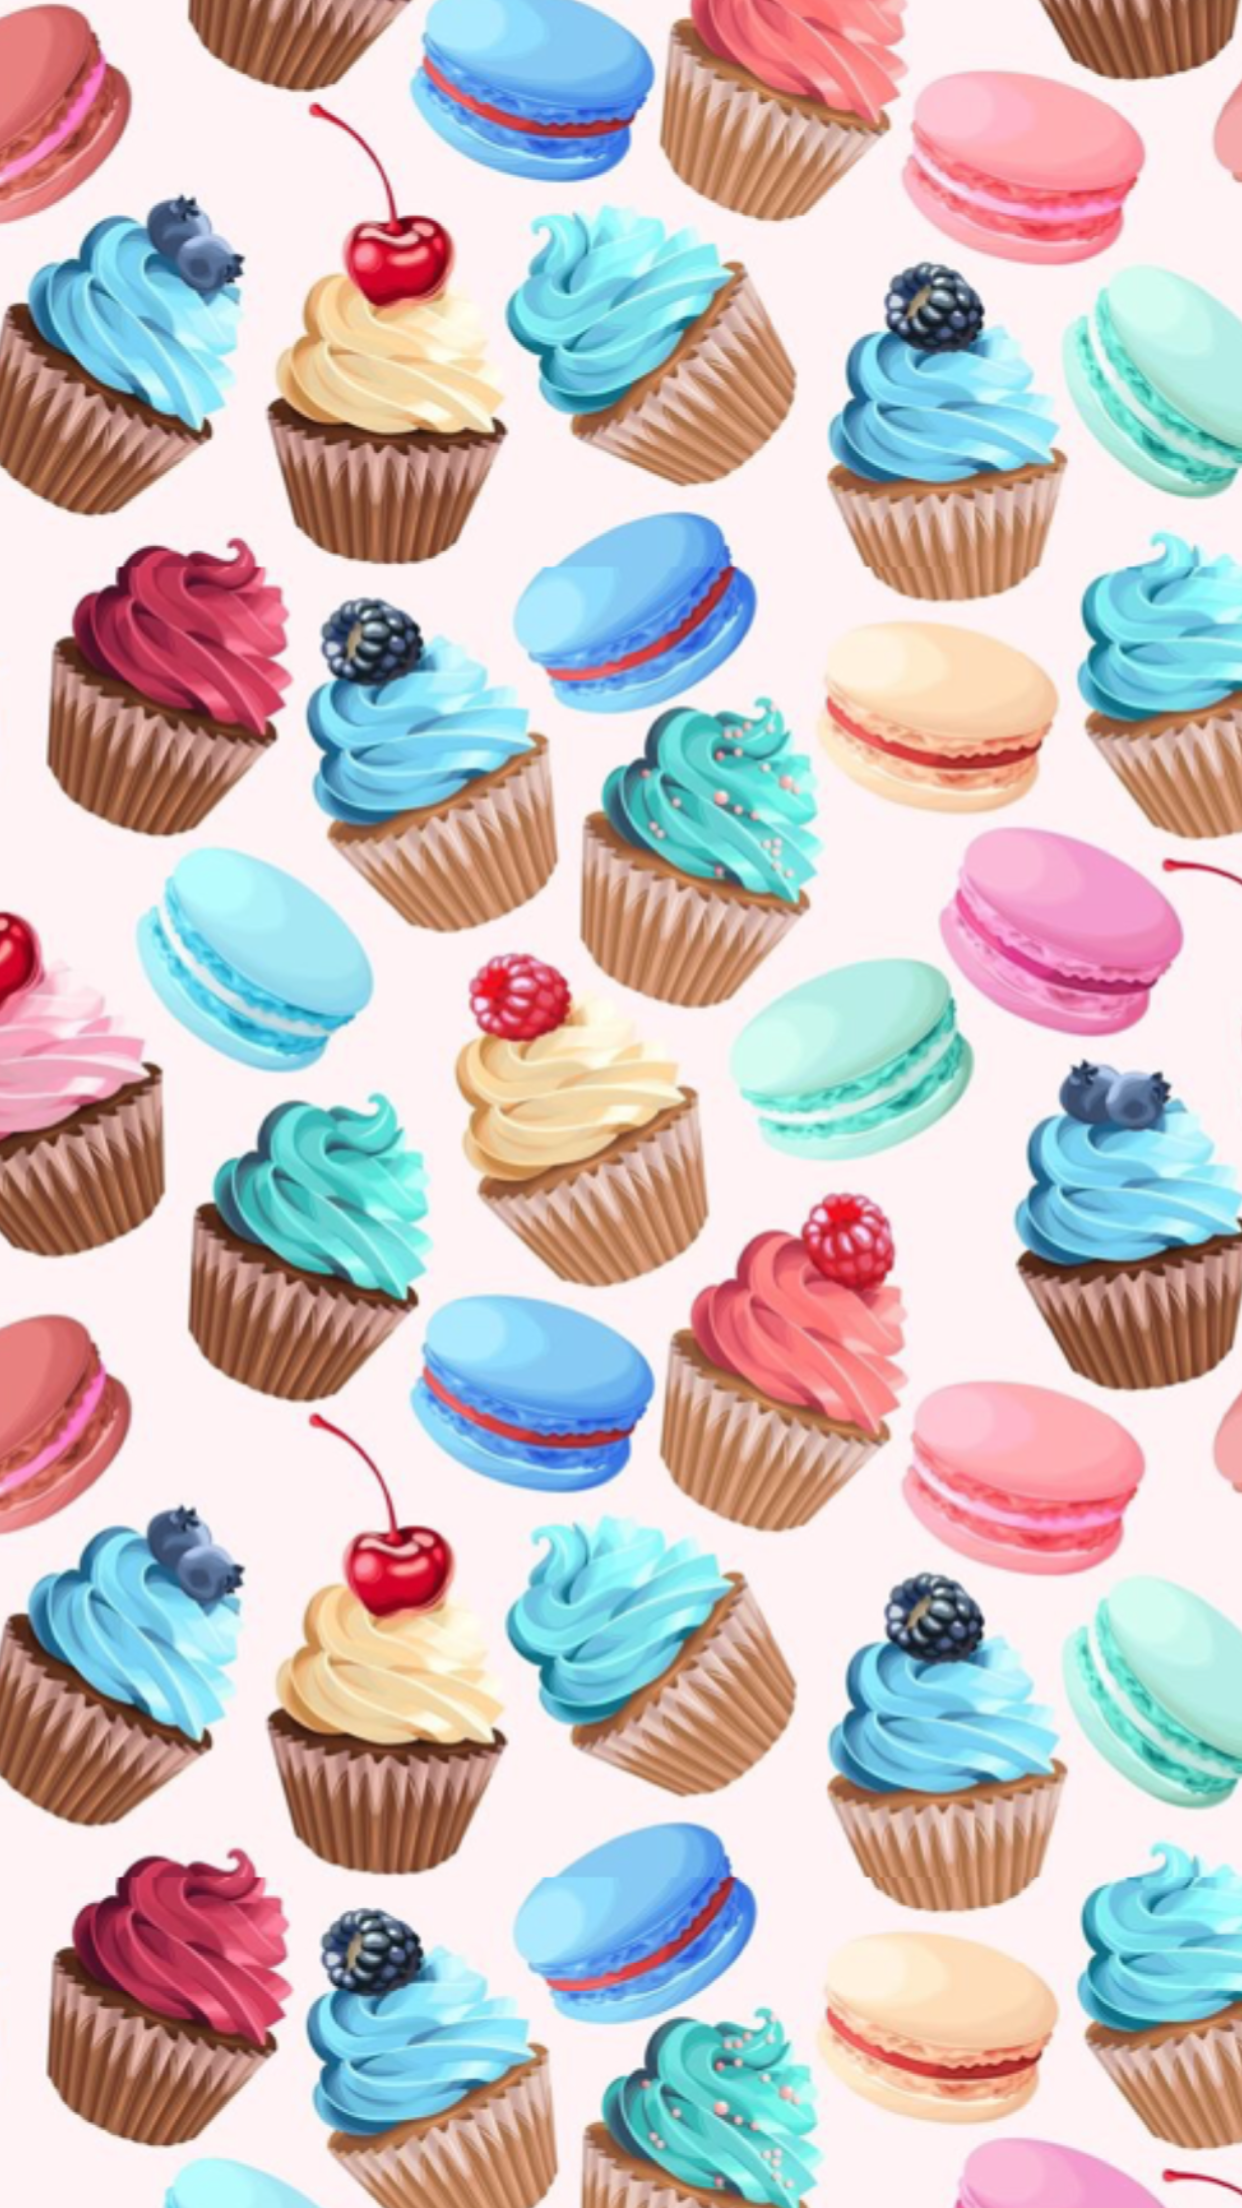 iPhone wallpaper i like. Cupcakes wallpaper, Food wallpaper, Cupcake illustration